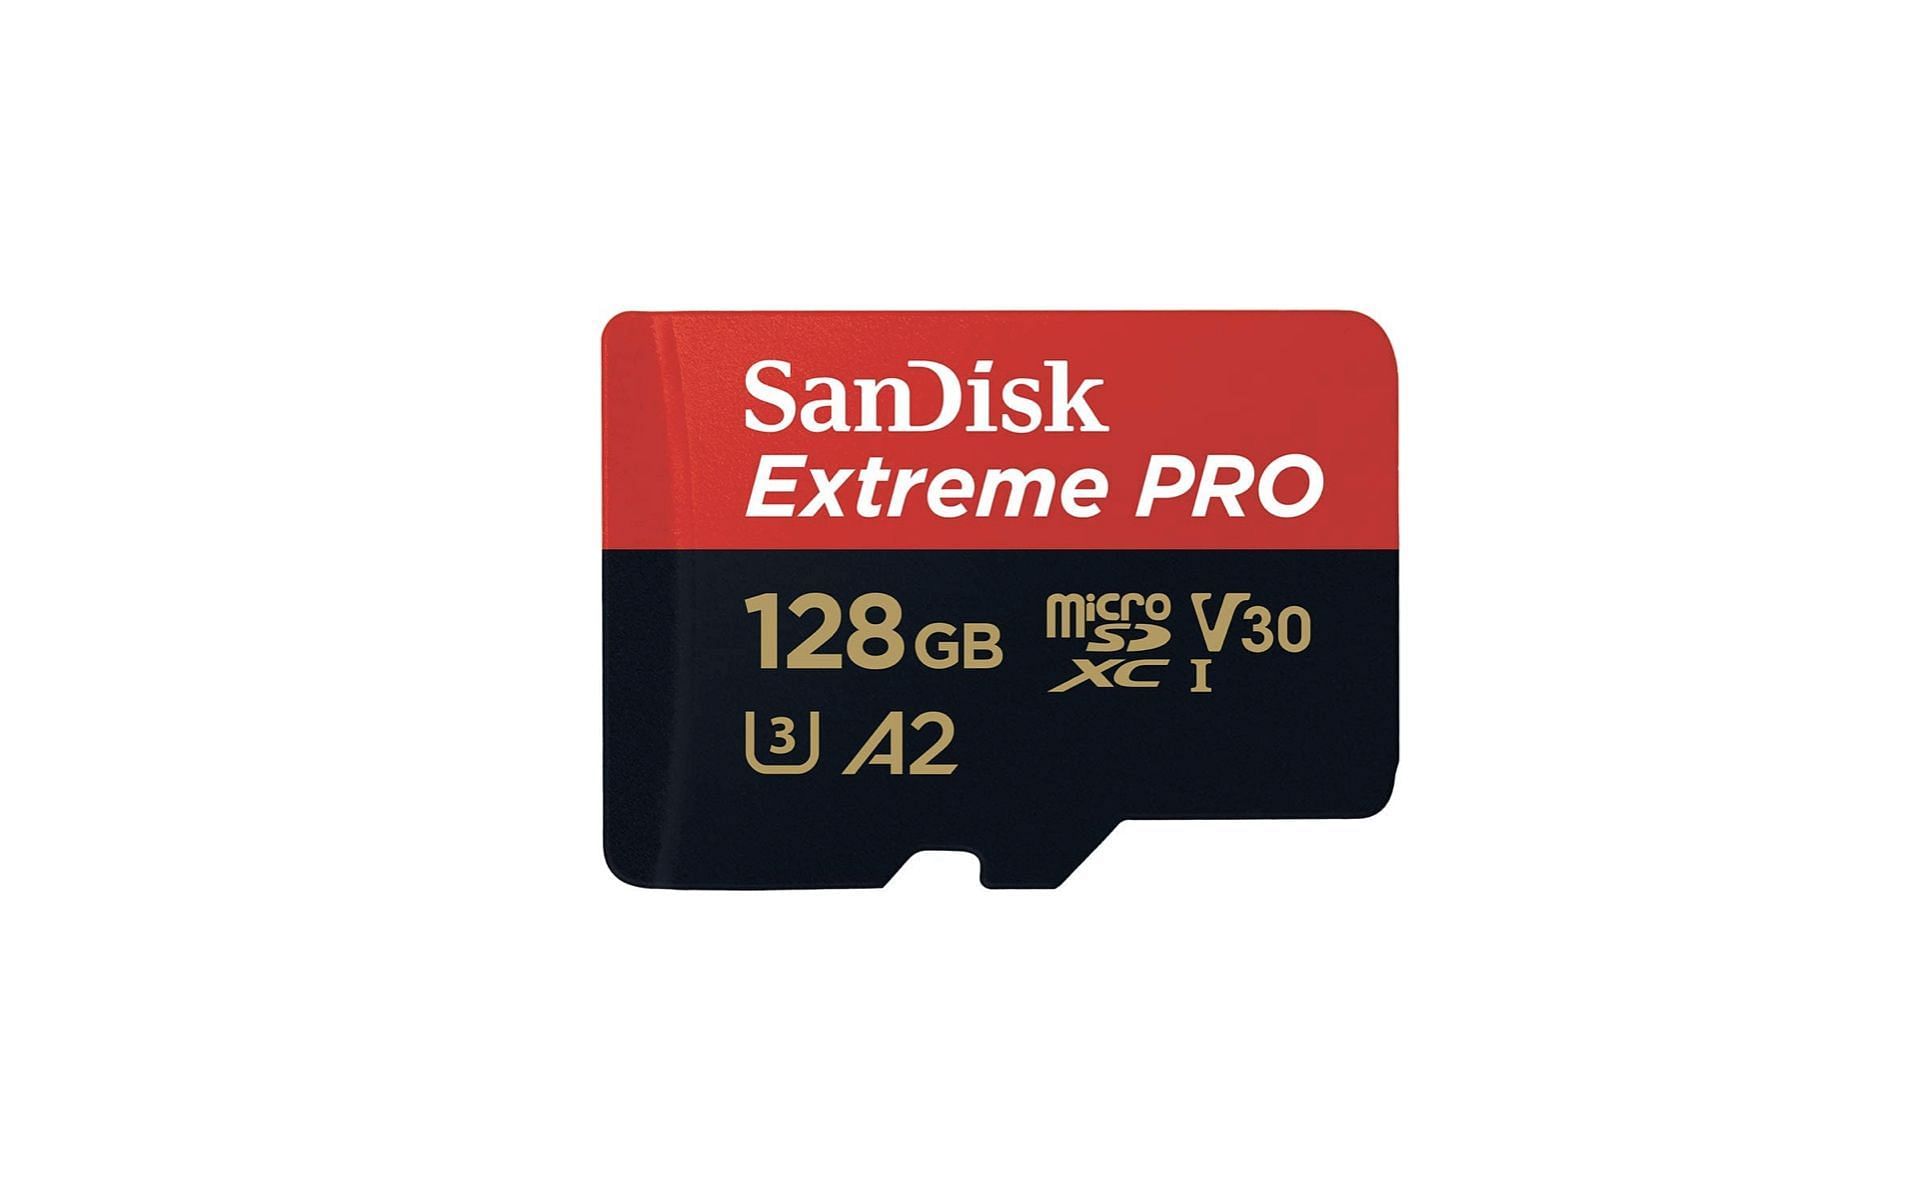 SanDisk Extreme Pro (Image via Amazon)